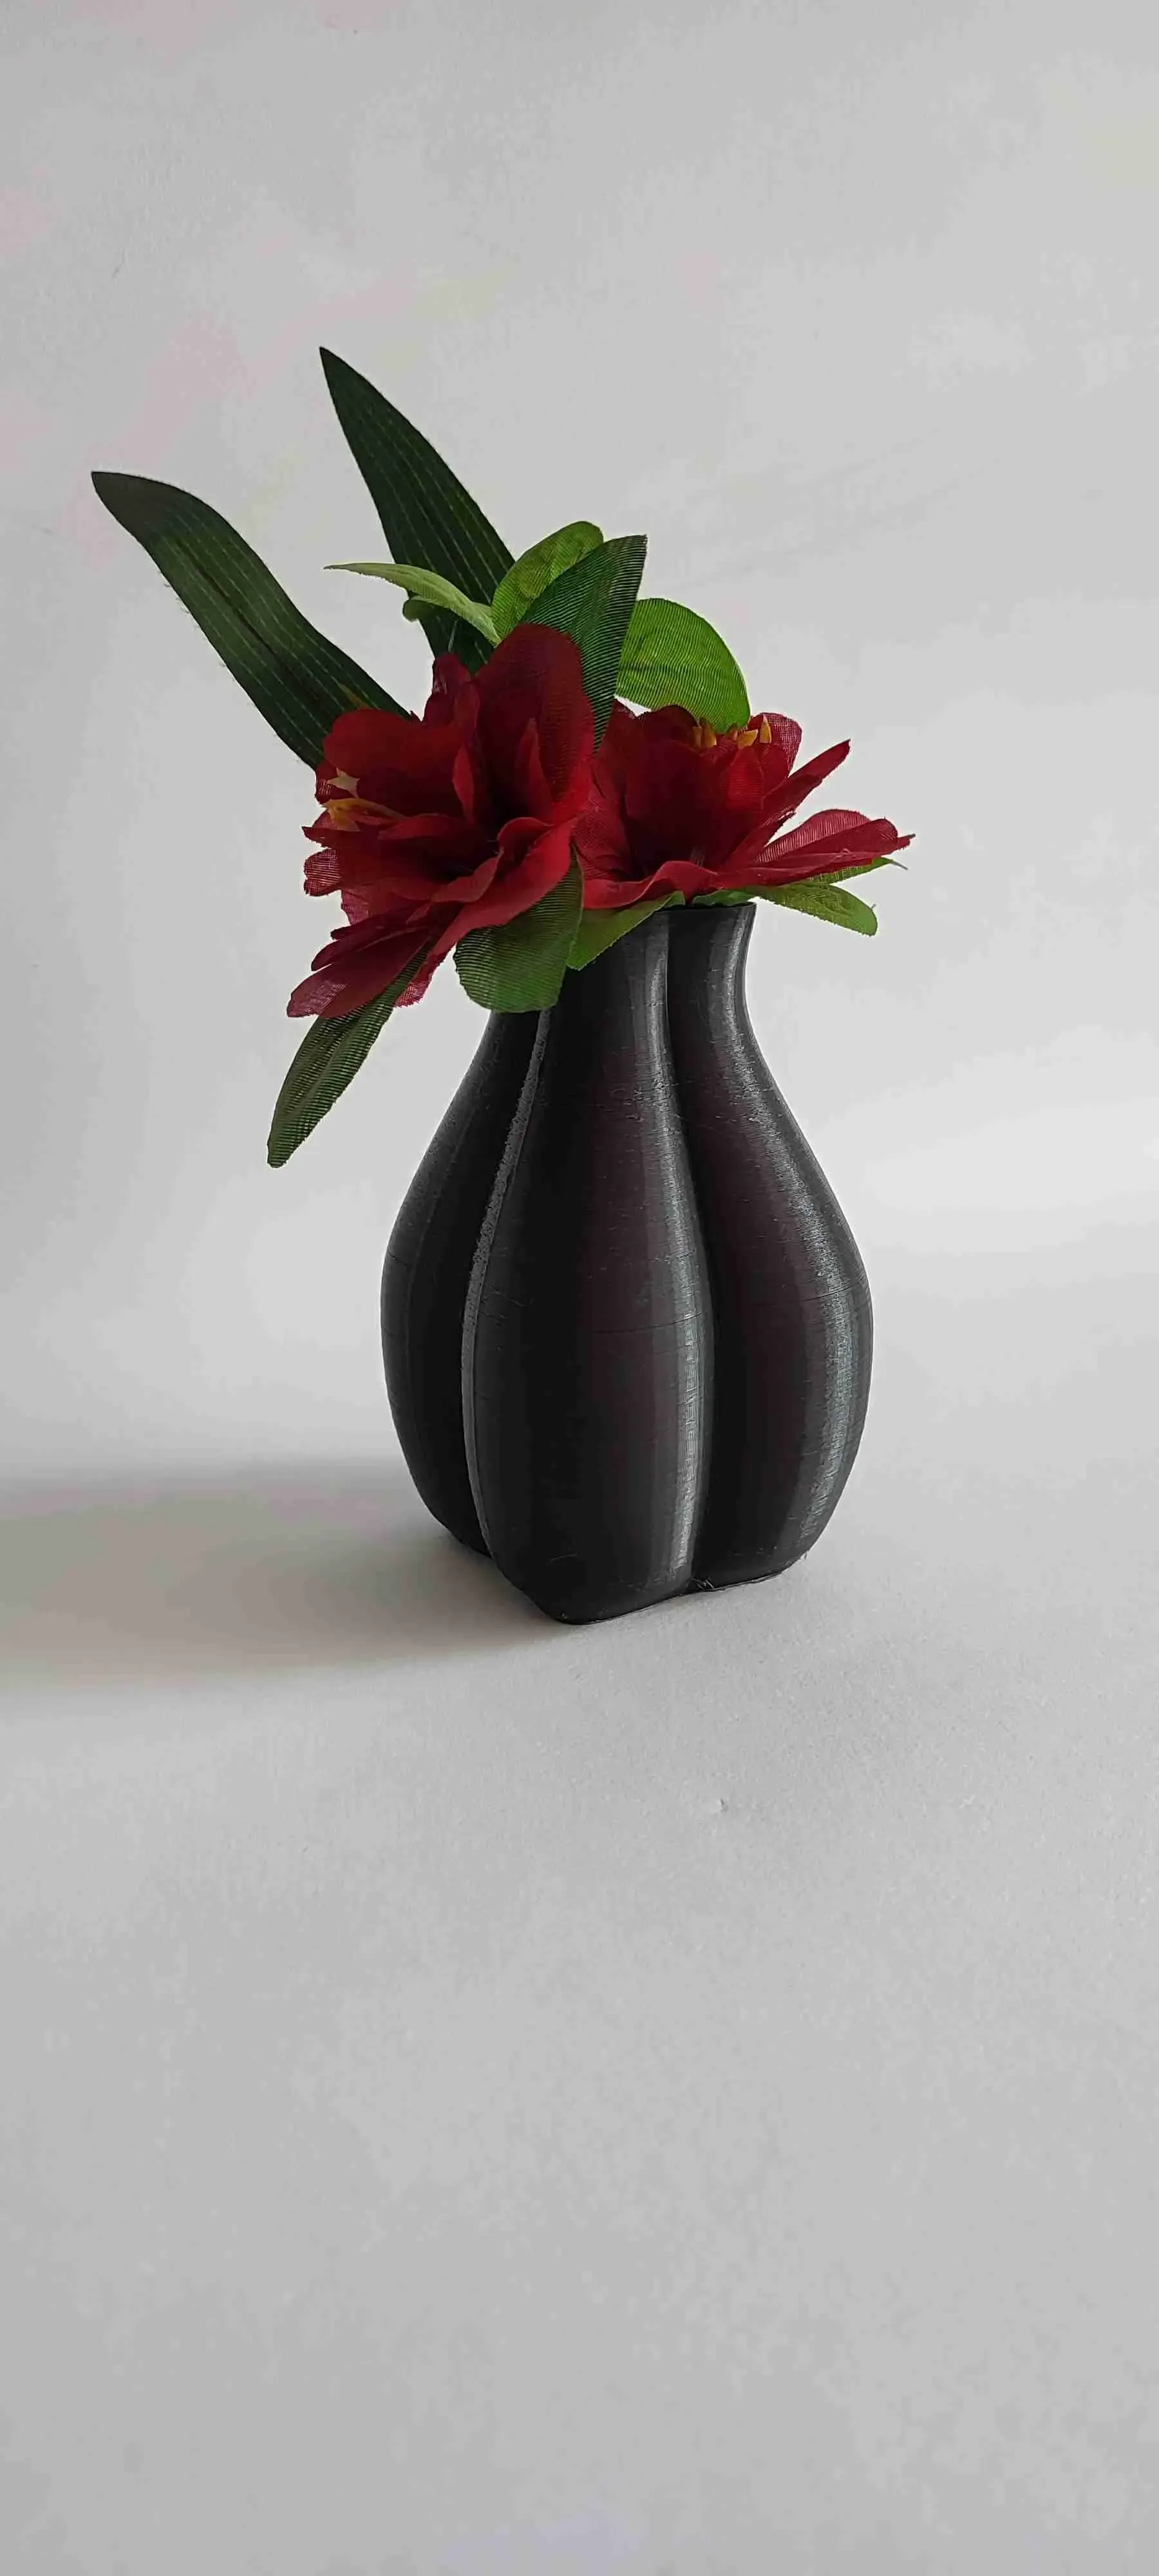 cloverleaf vase